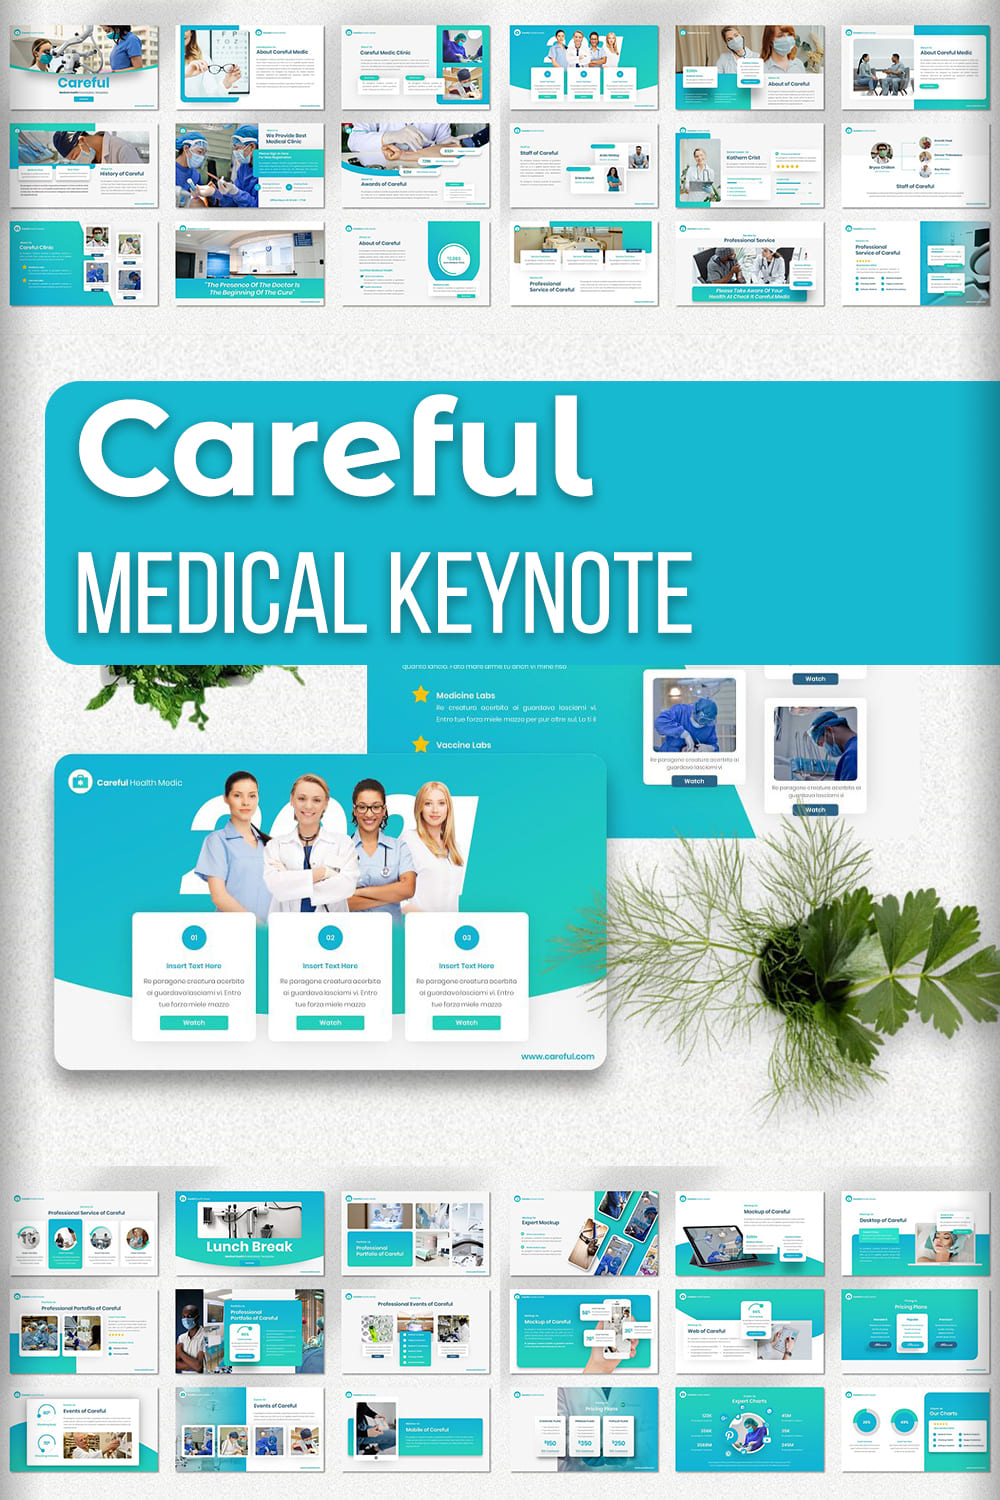 Pinterest - Careful - Medical Keynote.